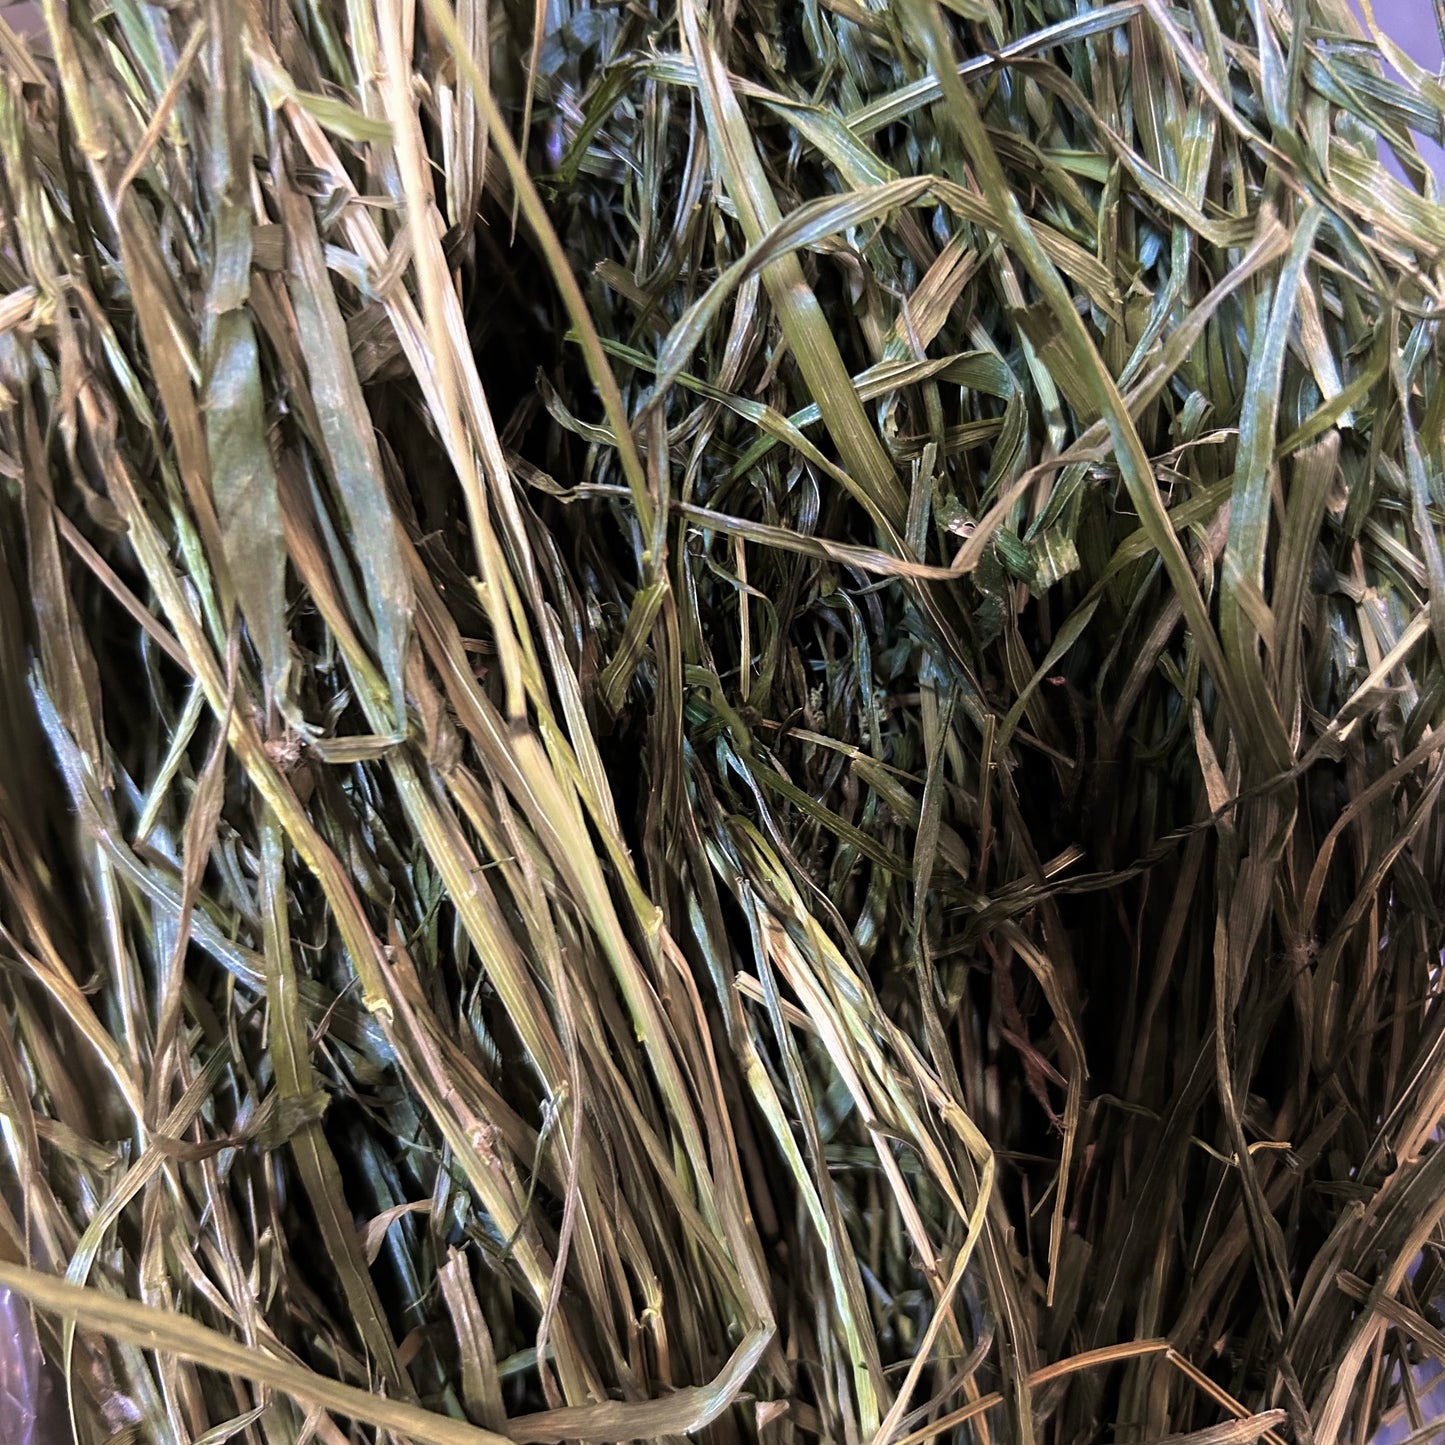 Dehydrated Ryegrass